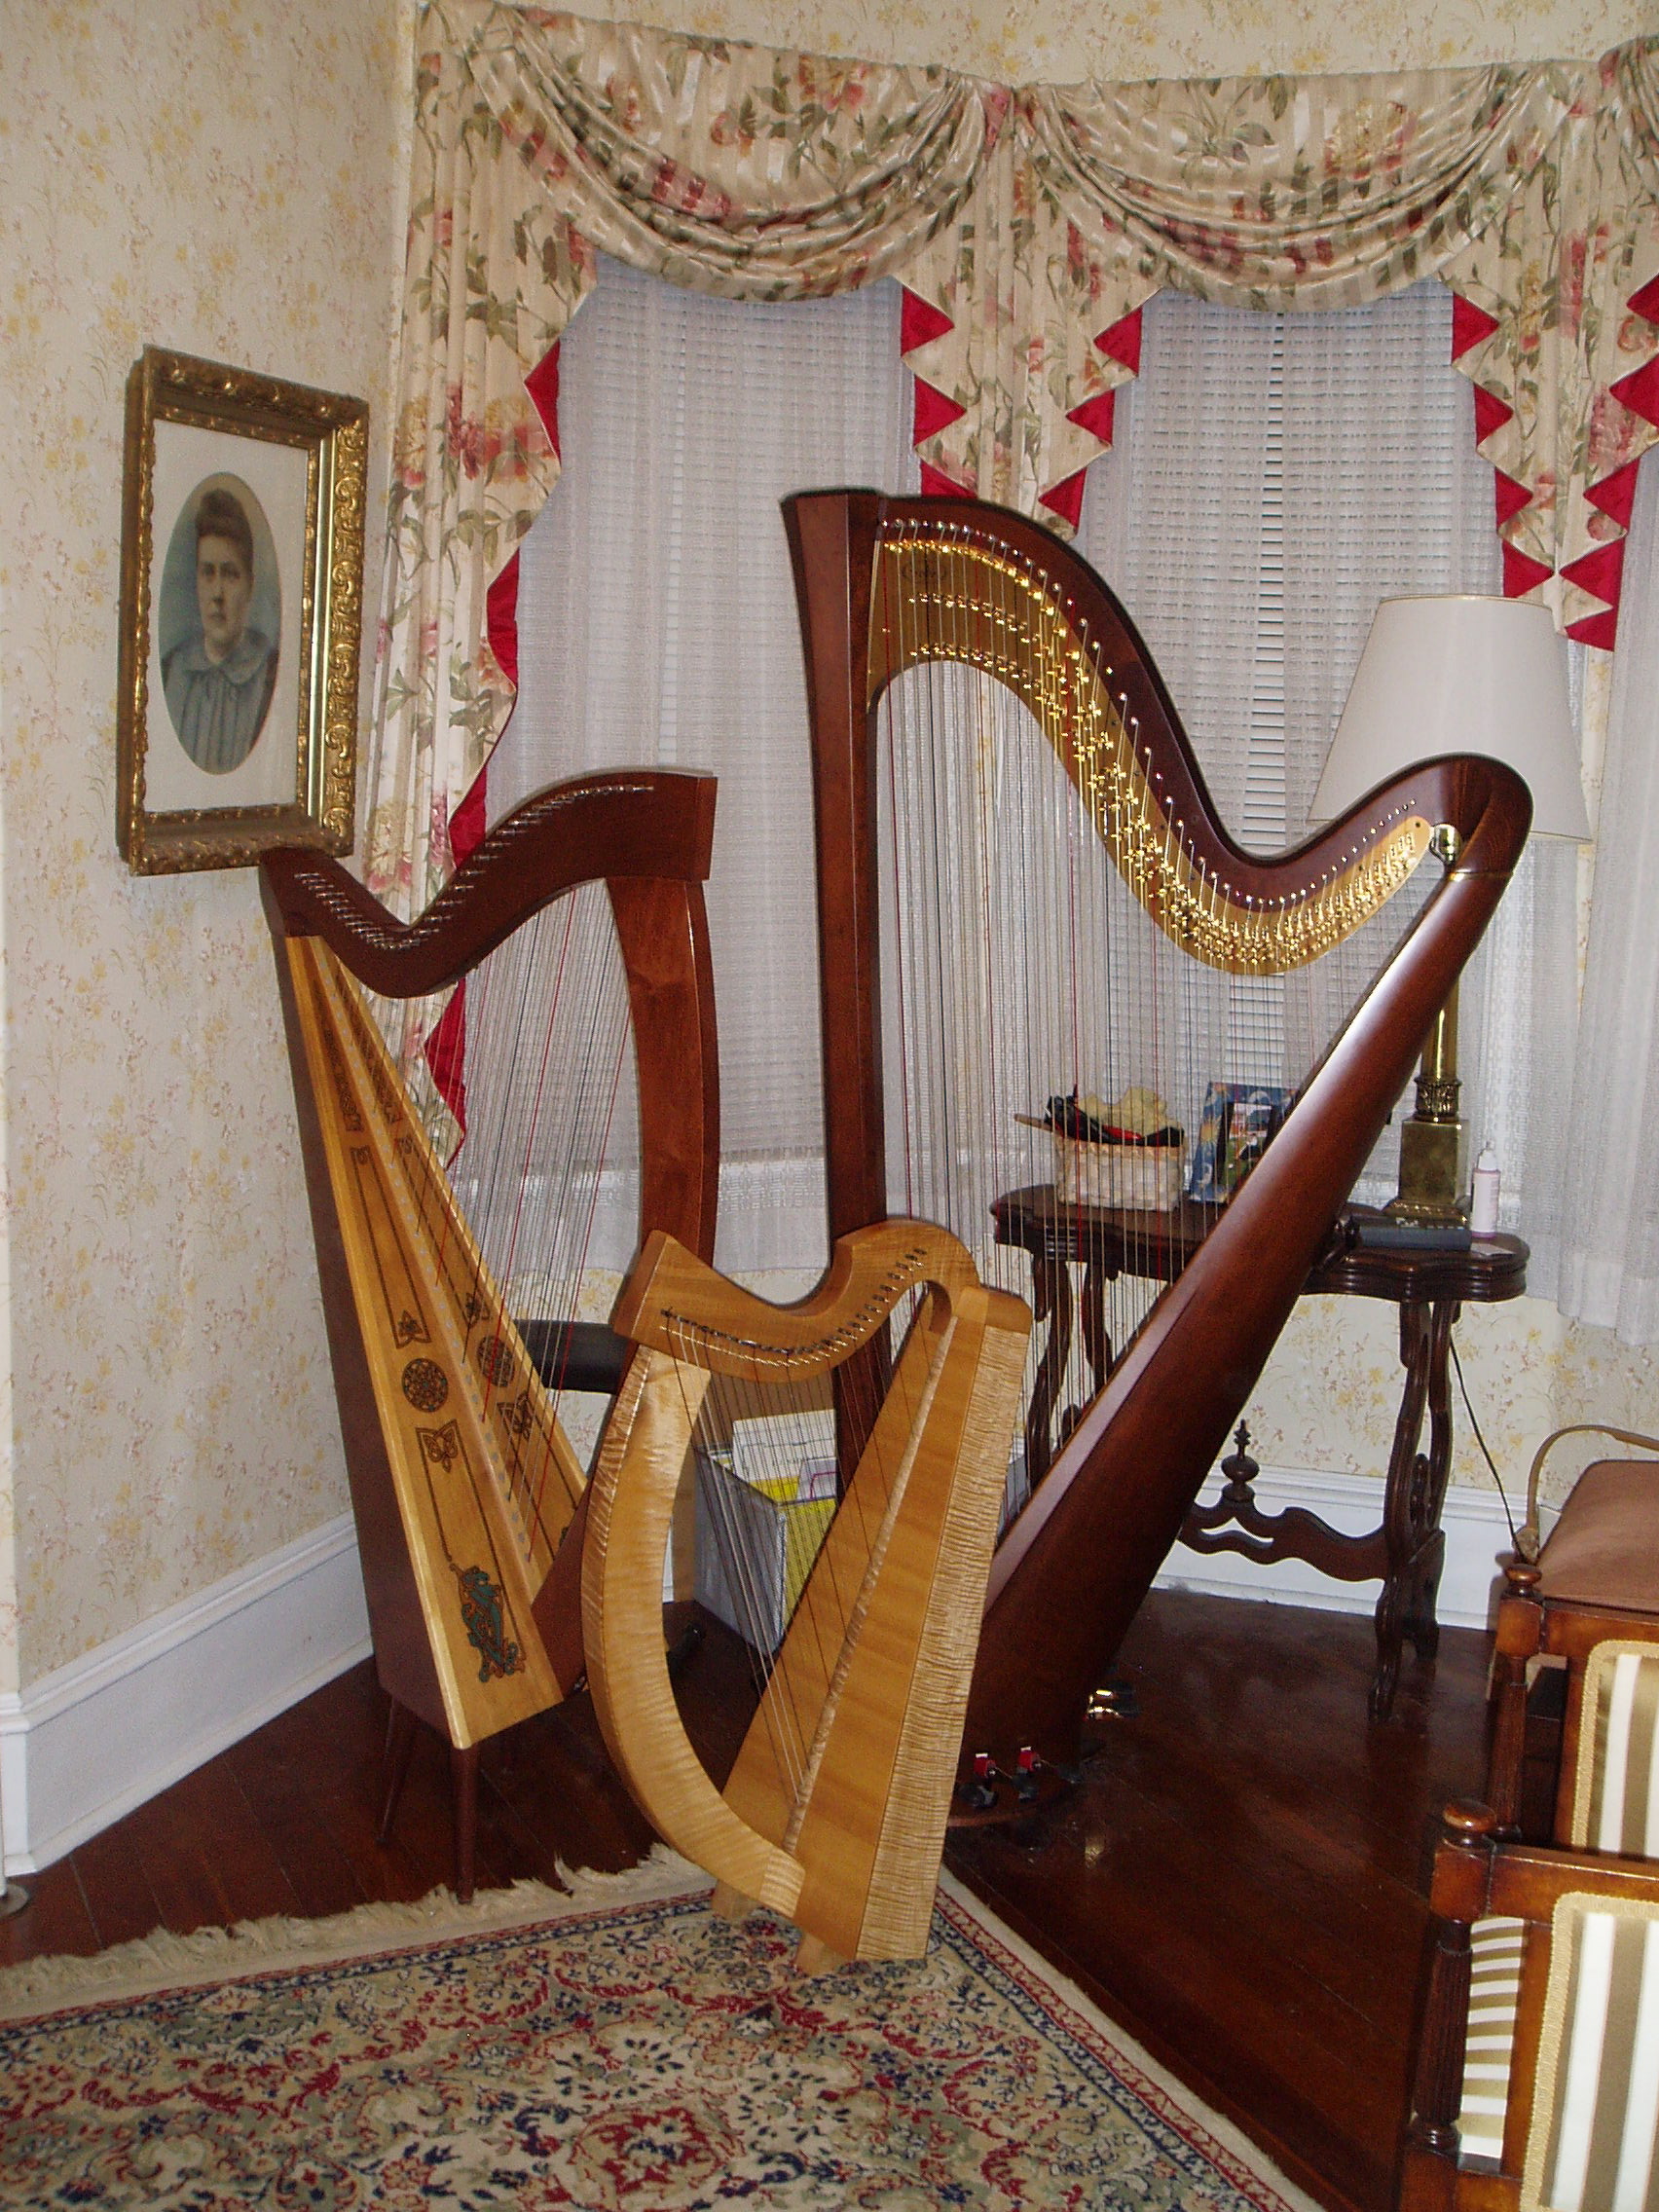 Picture of Harp Studio